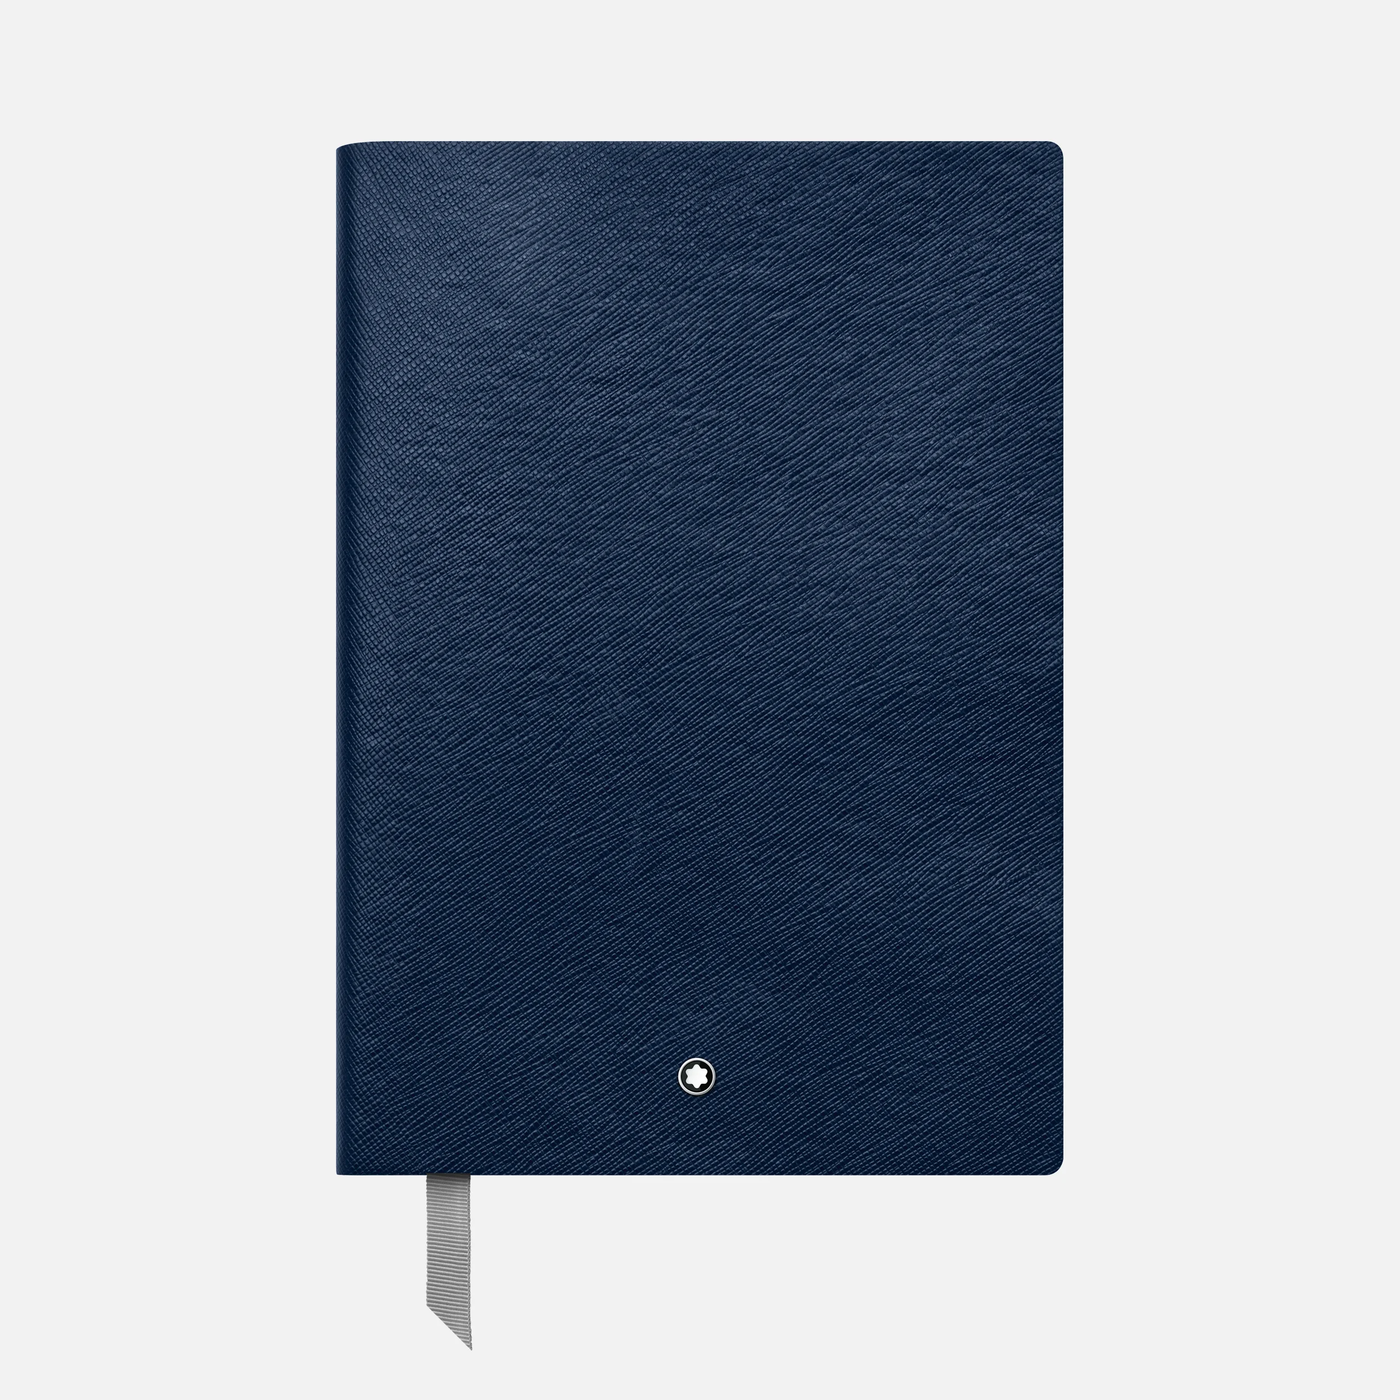 Montblanc Fine Stationery Notebook #146 Indigo Blue Squared Graph Notebook